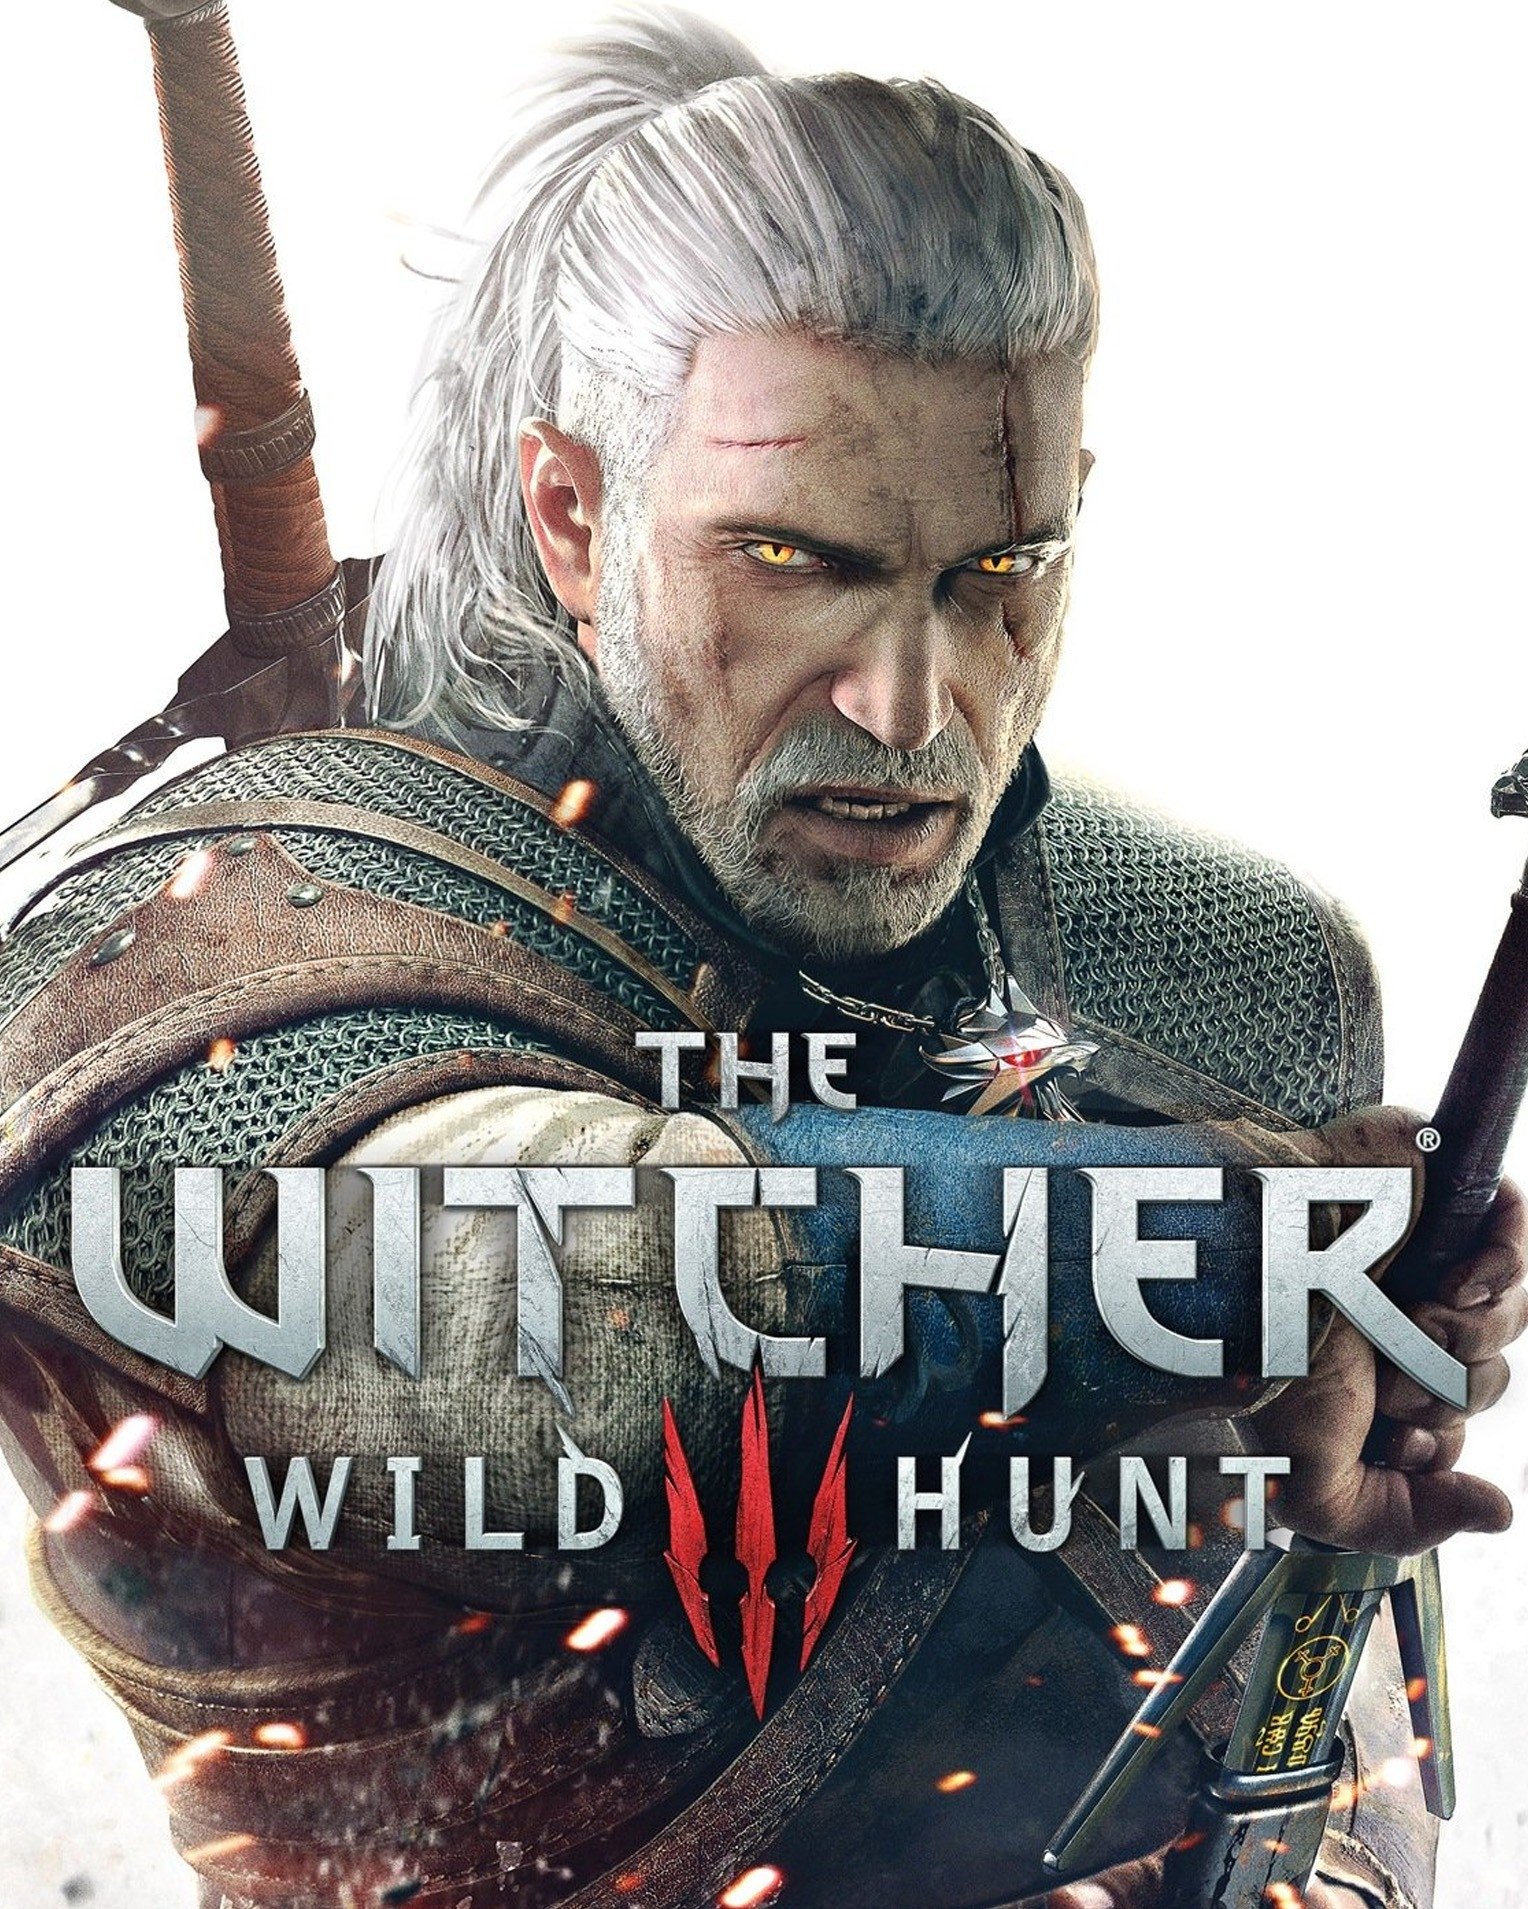 The Witcher 3: Wild Hunt – Juego del Año 2015